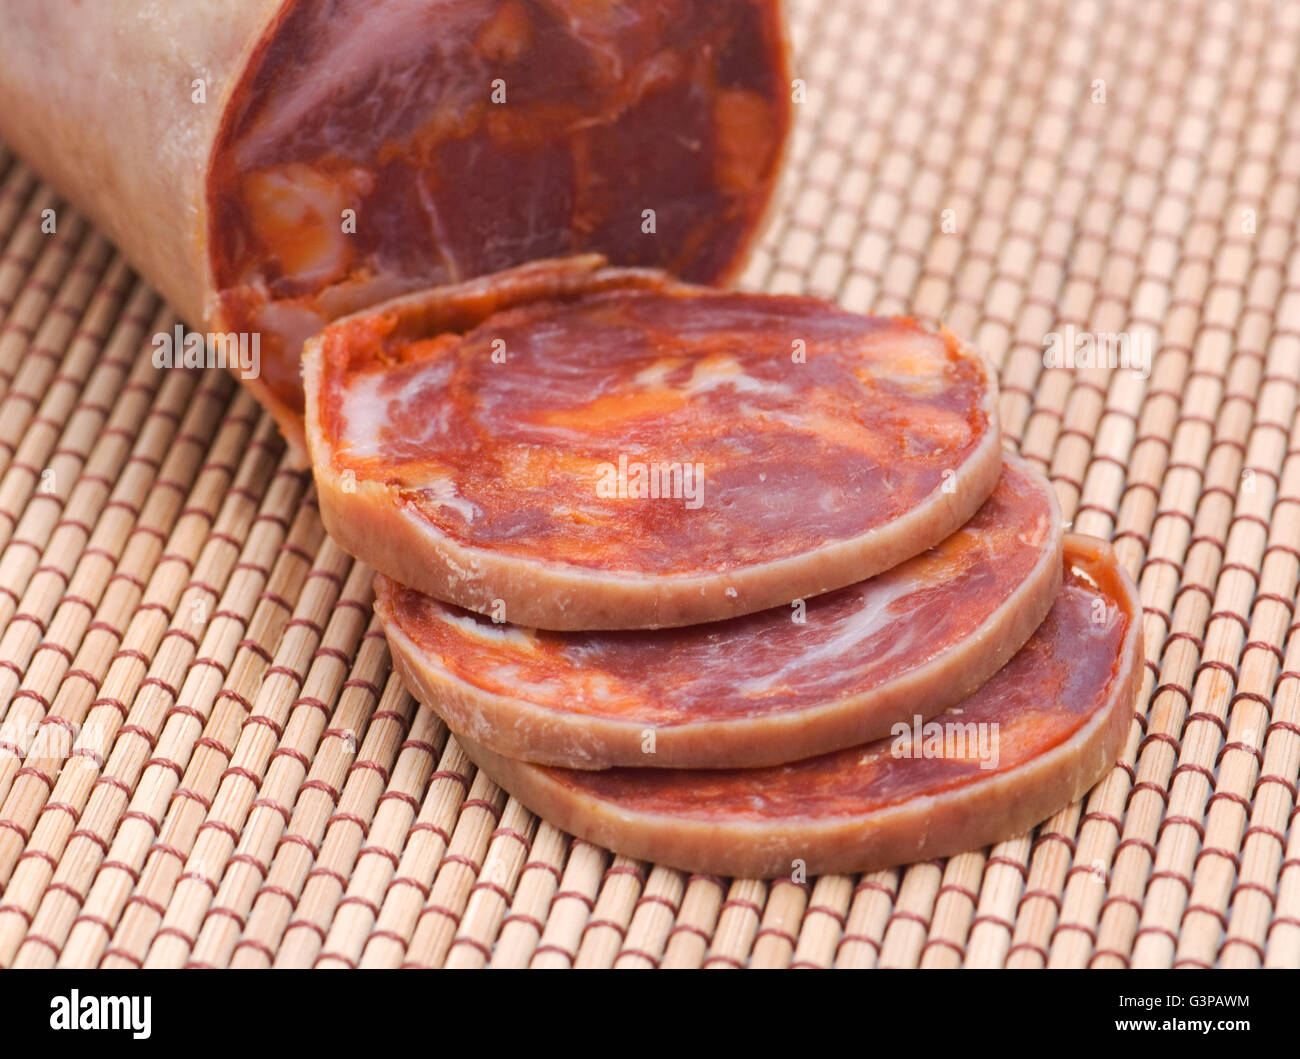 Chopped pork sausage on a cutting board Stock Photo